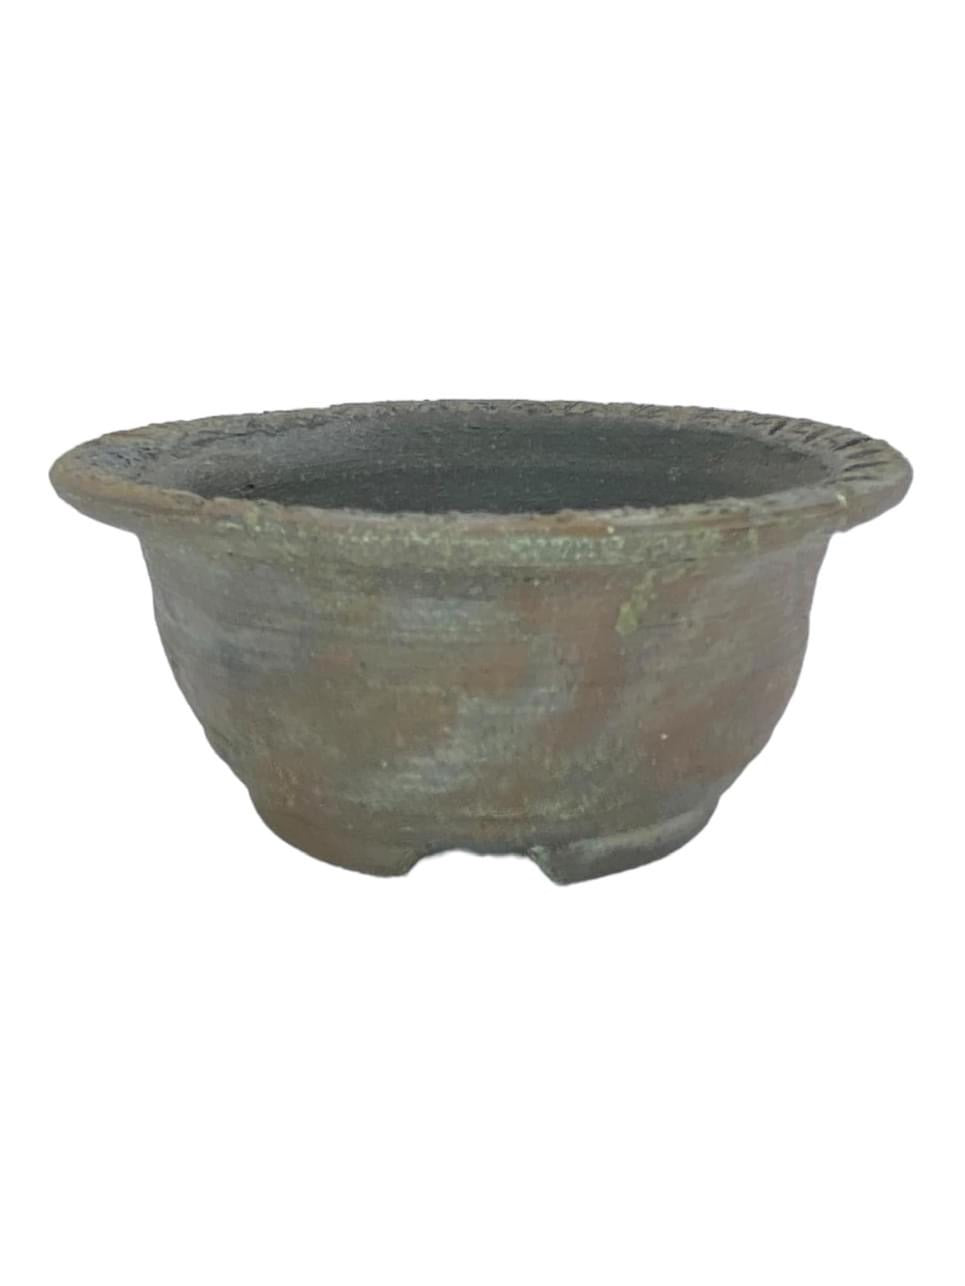 Tamba Tachikui-ware - Older Round Bowl Bonsai or Accent Pot